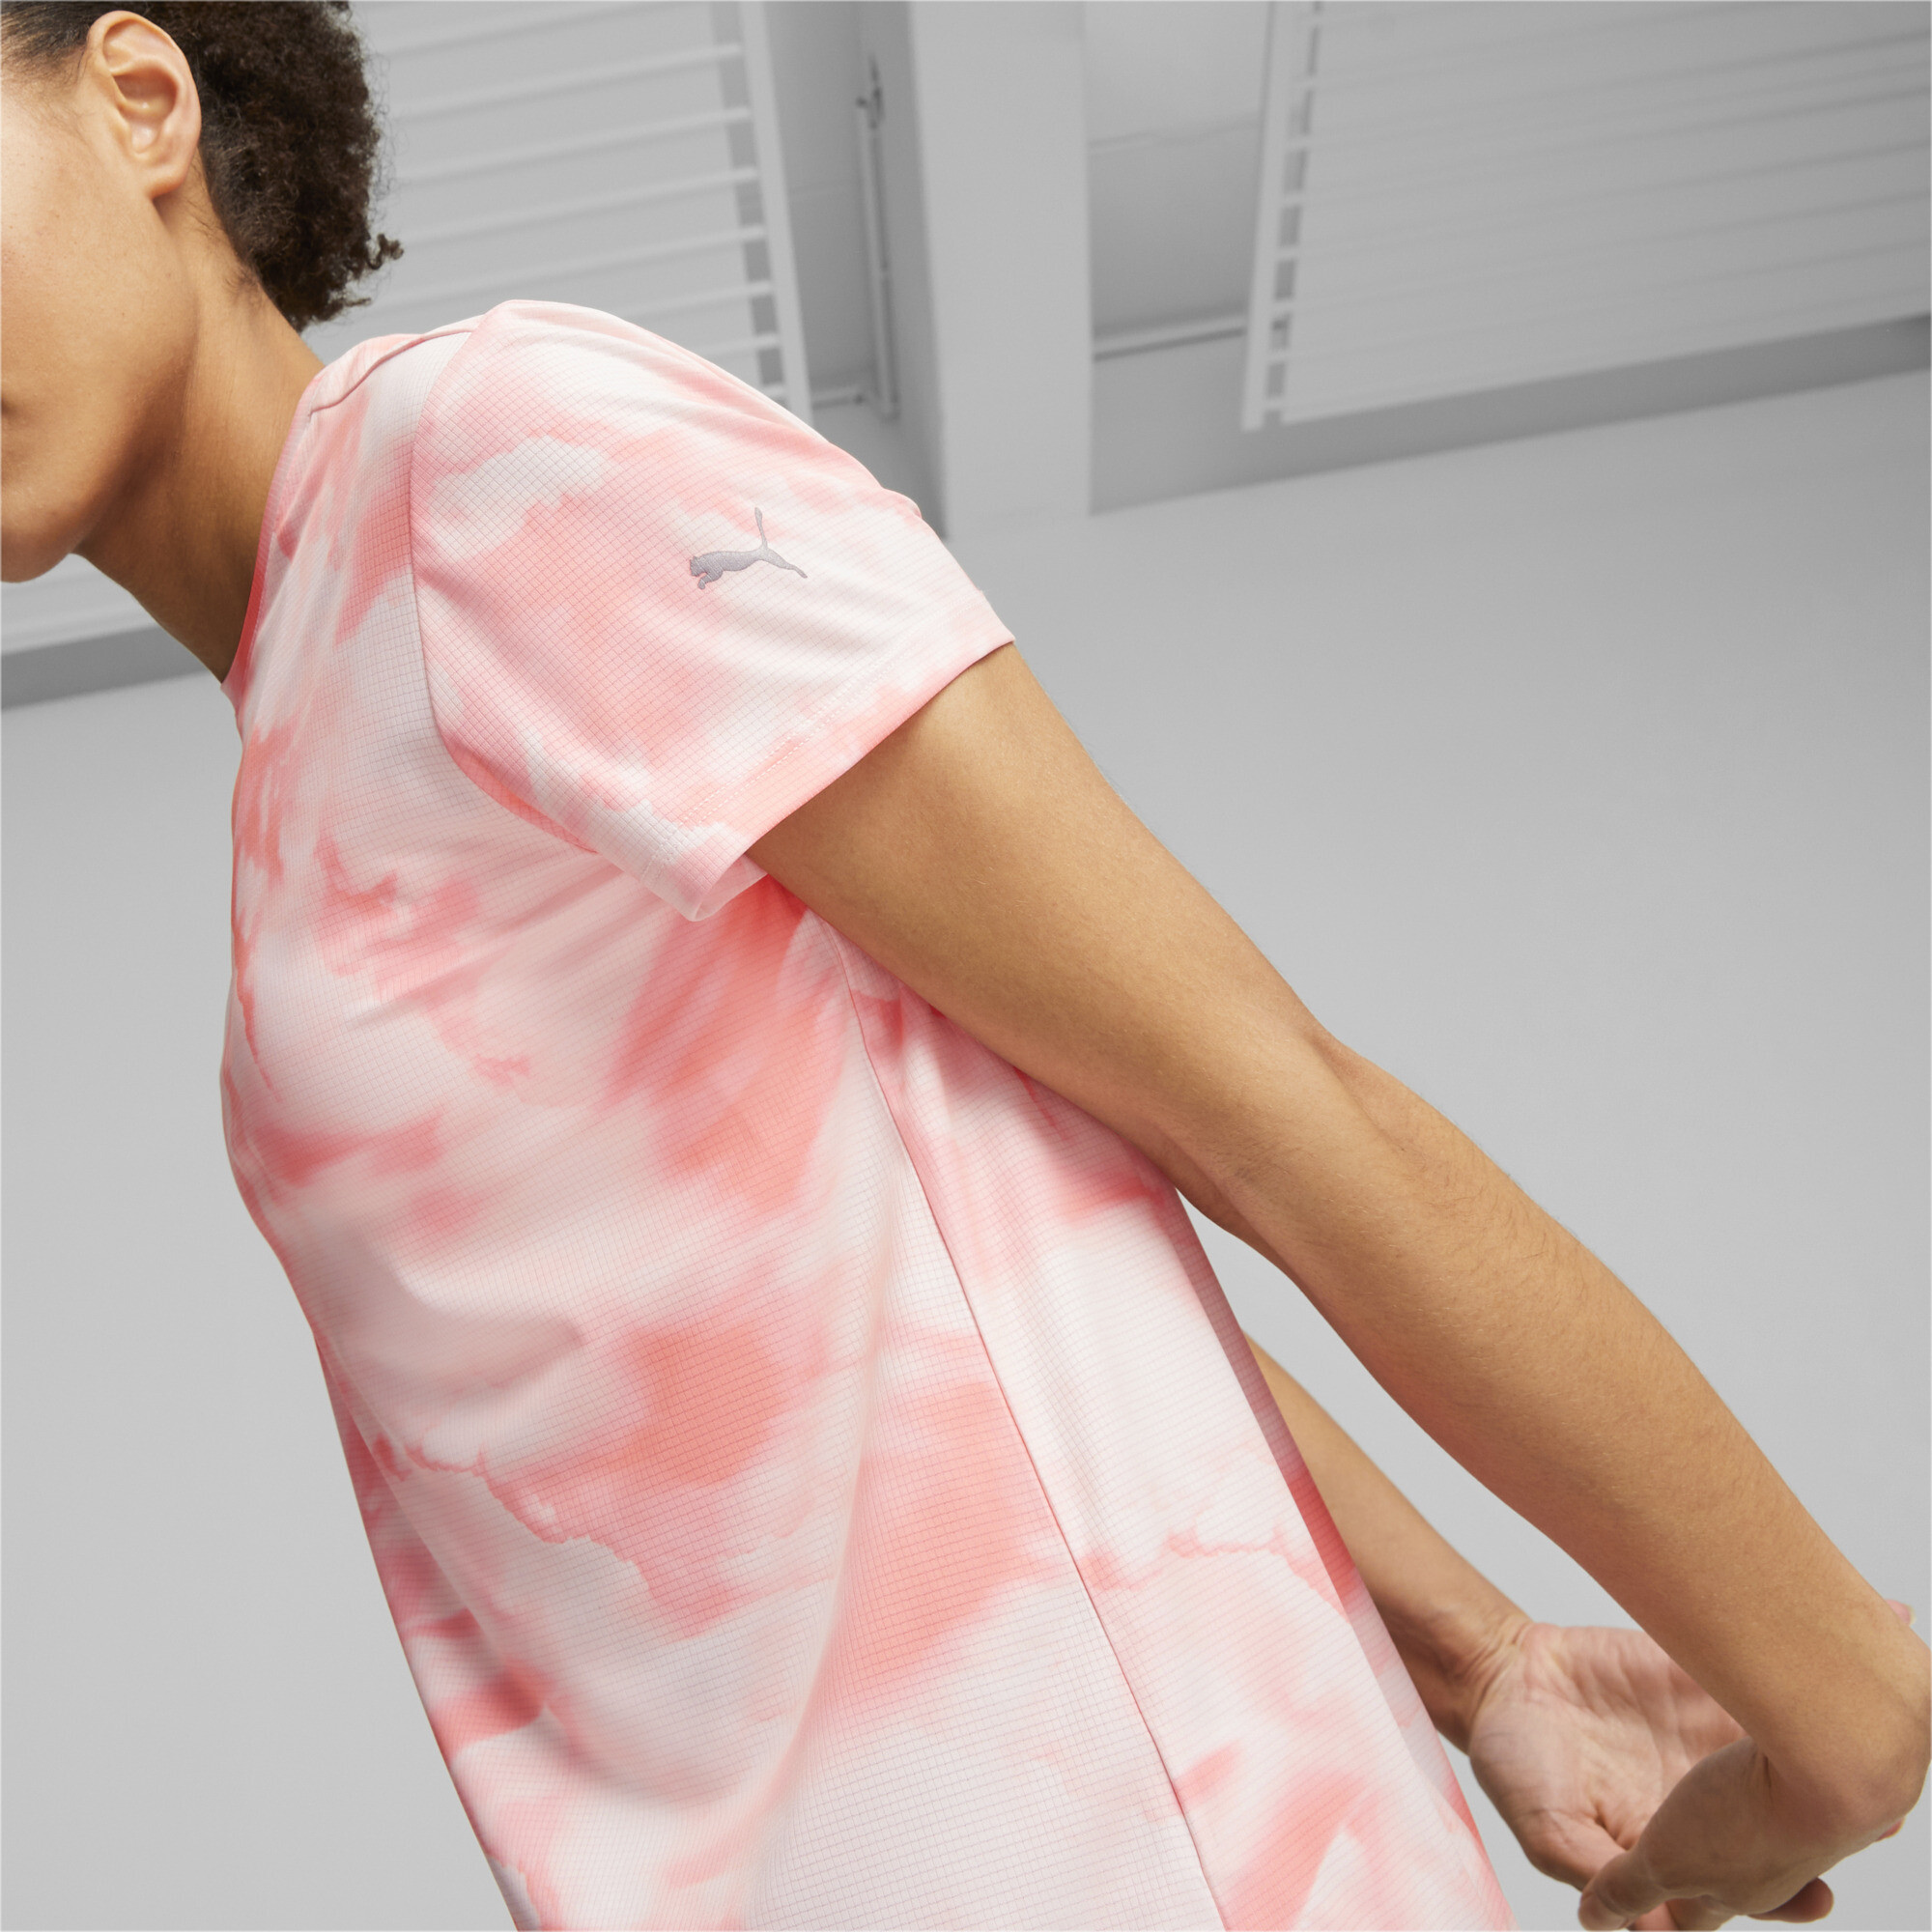 Women's Puma Run Favorite's T-Shirt, Pink, Size S, Clothing